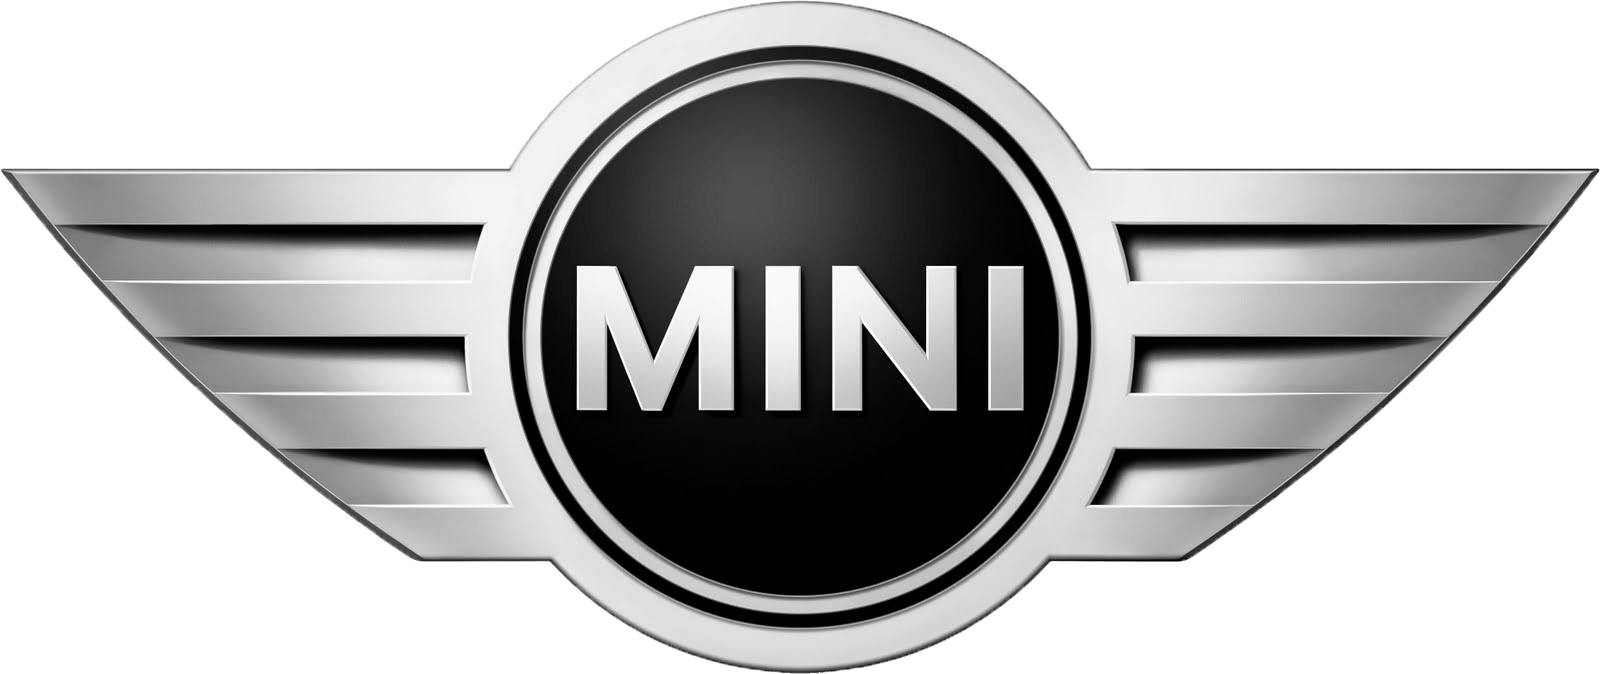 New Mini Cooper Logo - Mini Cooper logo | The Next Wave